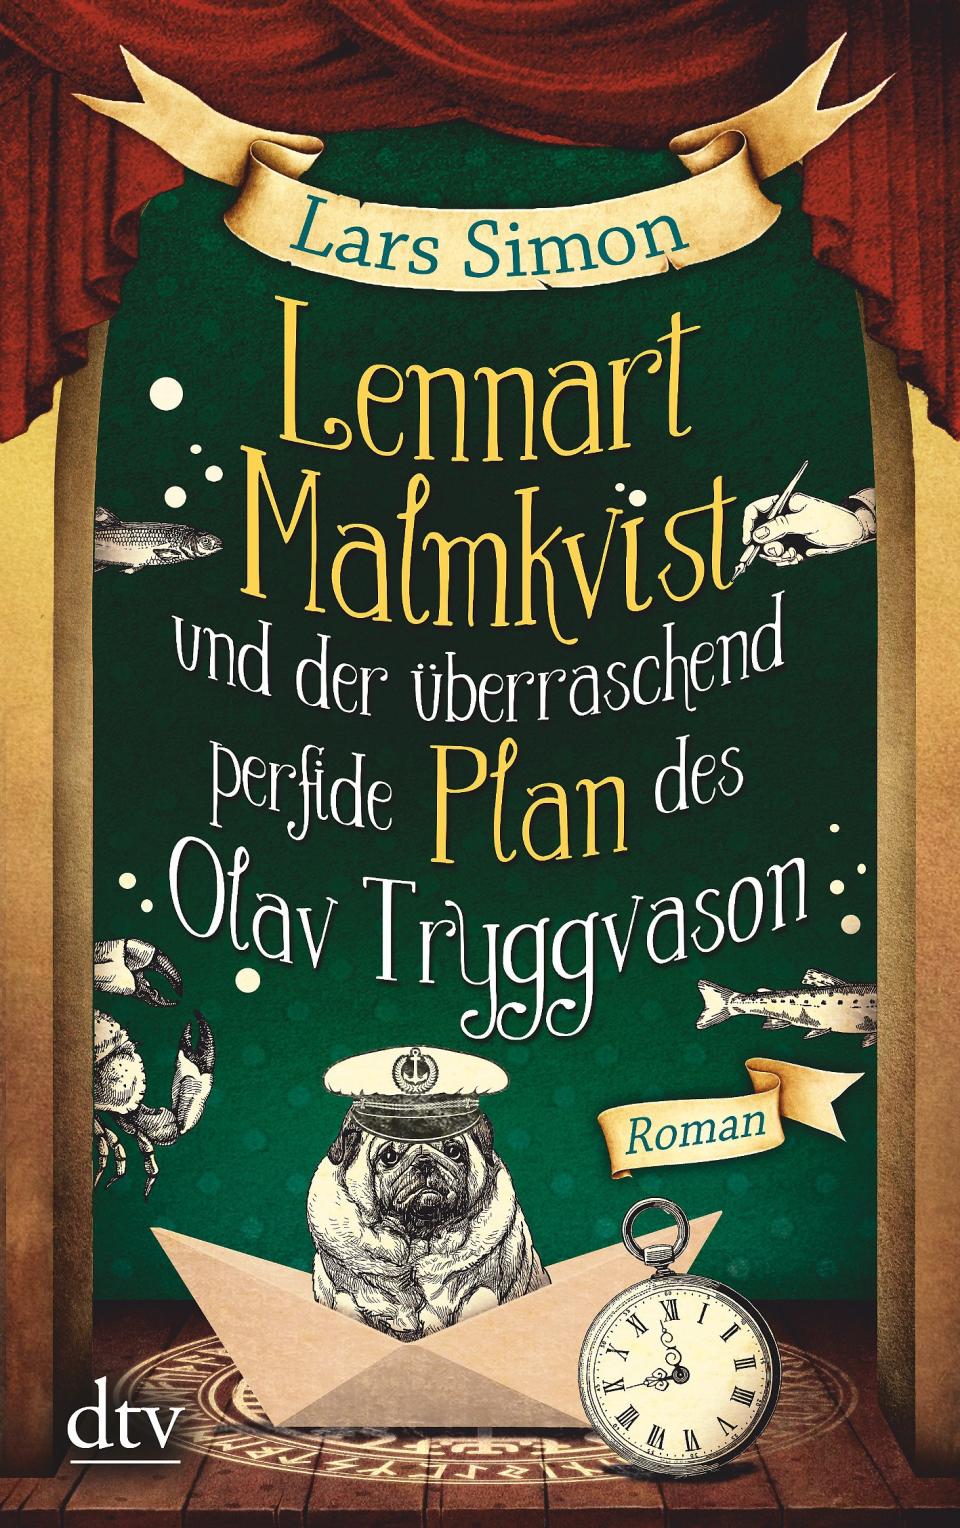 Das zauberhafte Finale der Reihe um Lennart Malmkvist. (Bild: dtv Verlagsgesellschaft)